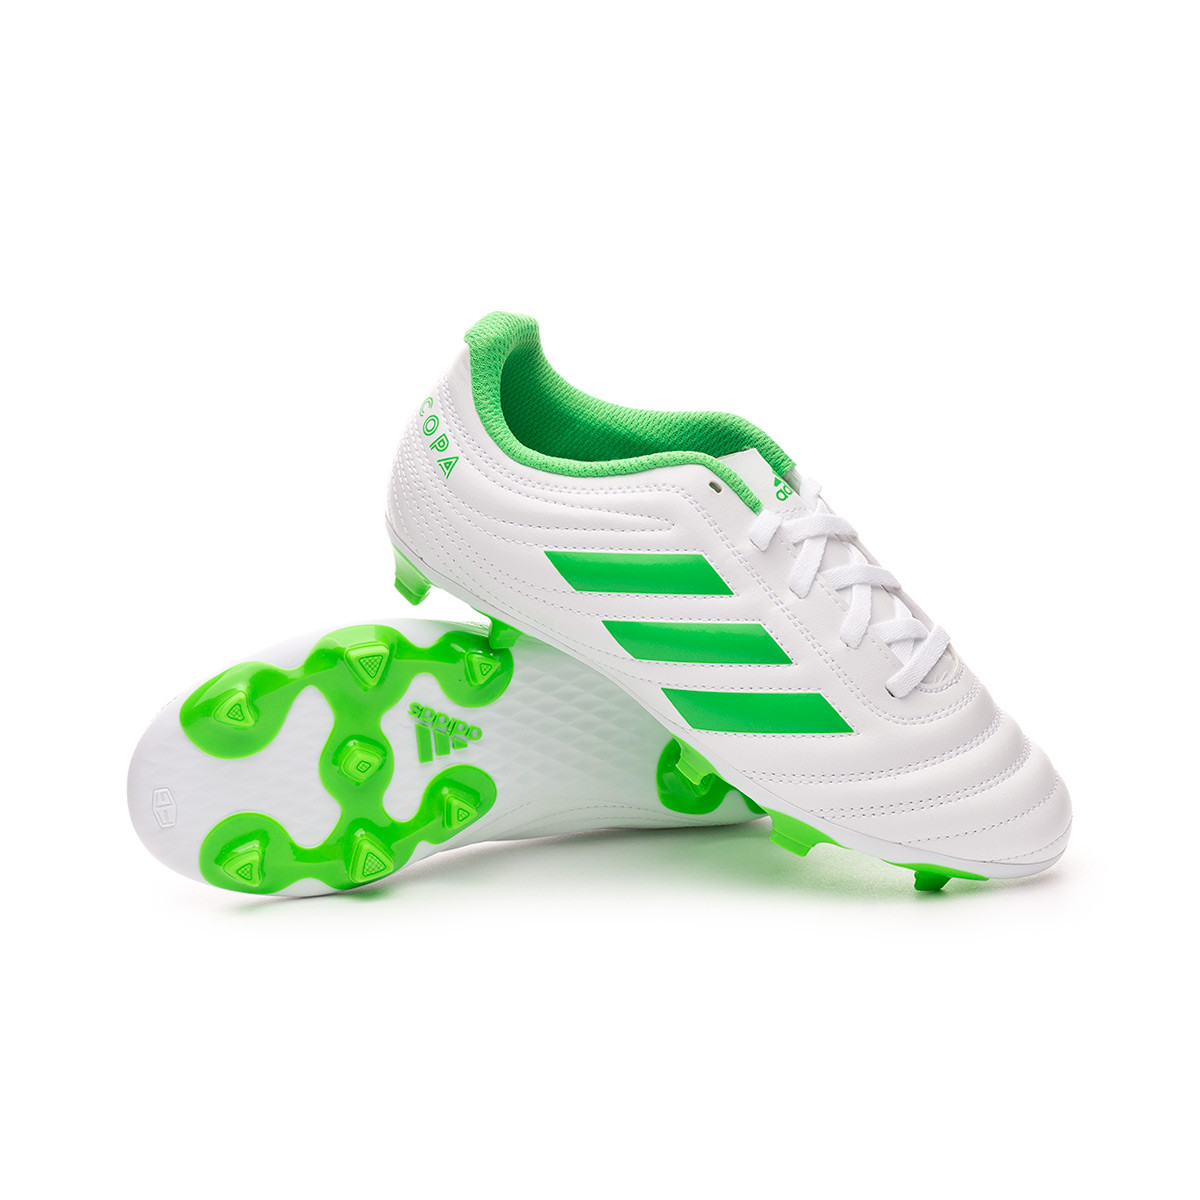 lime green adidas football boots